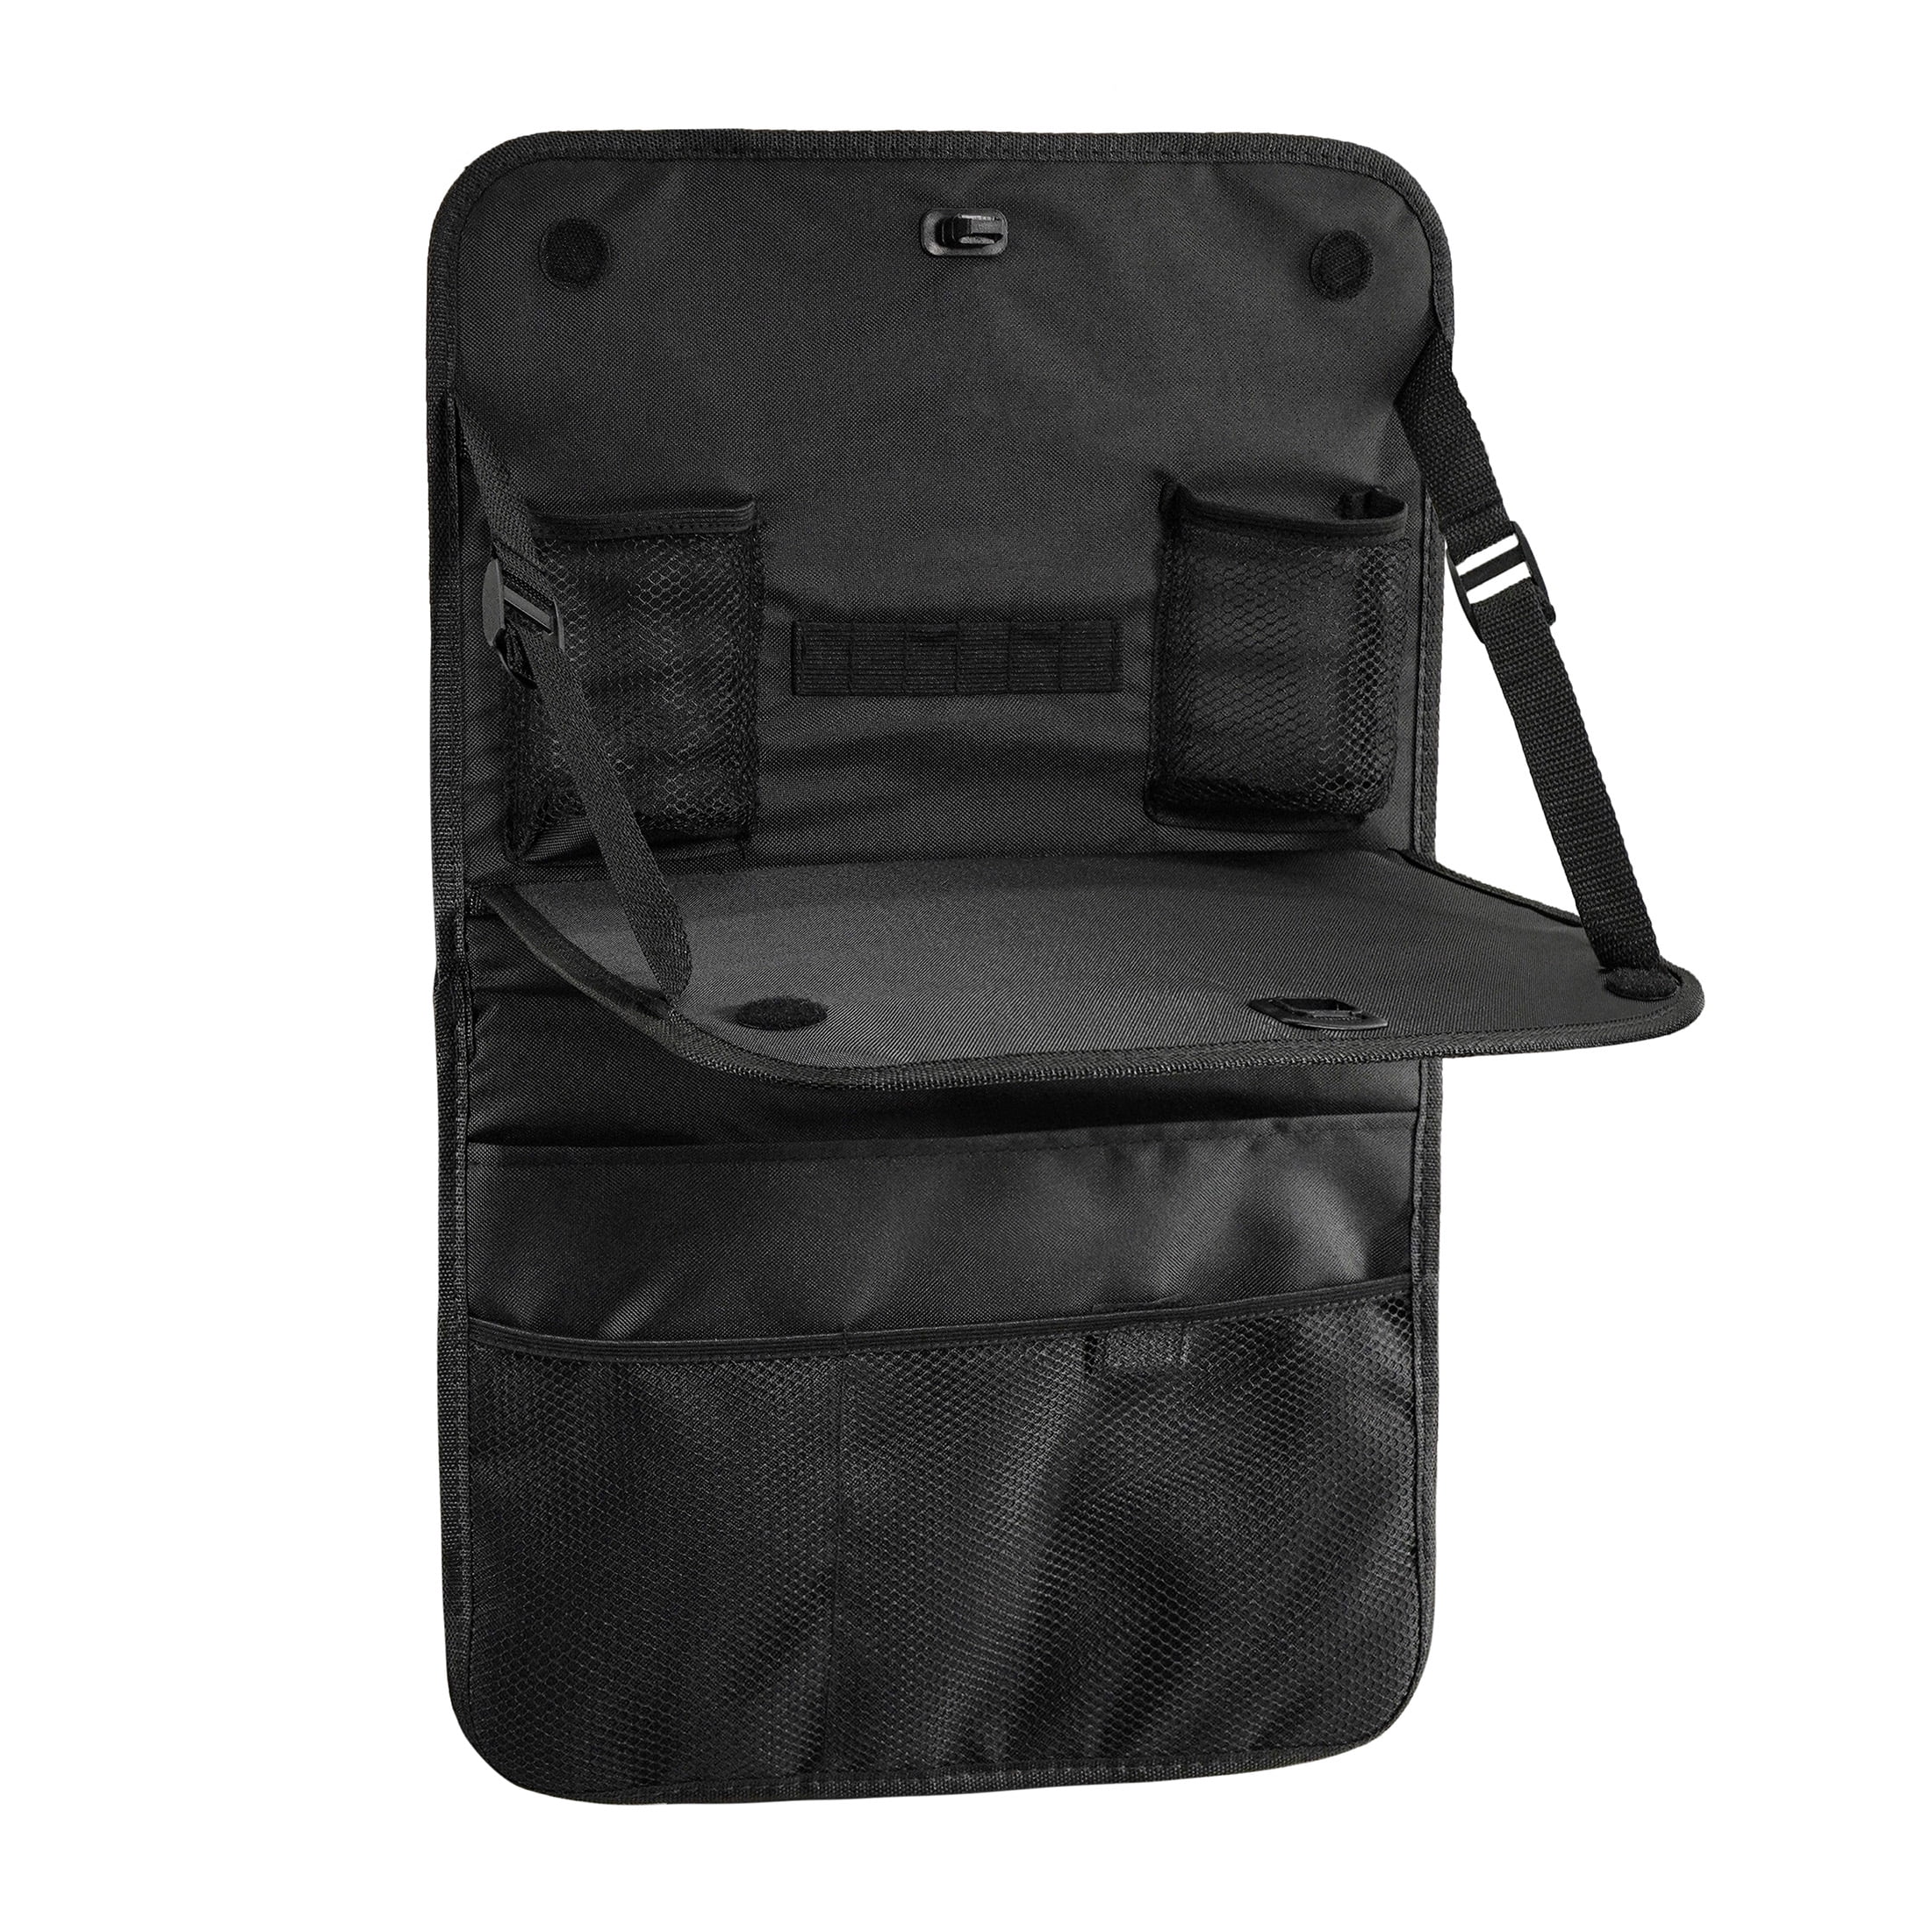 Multibag Car Organizer 64x40 cm black, Backseat pockets, Kids & Co